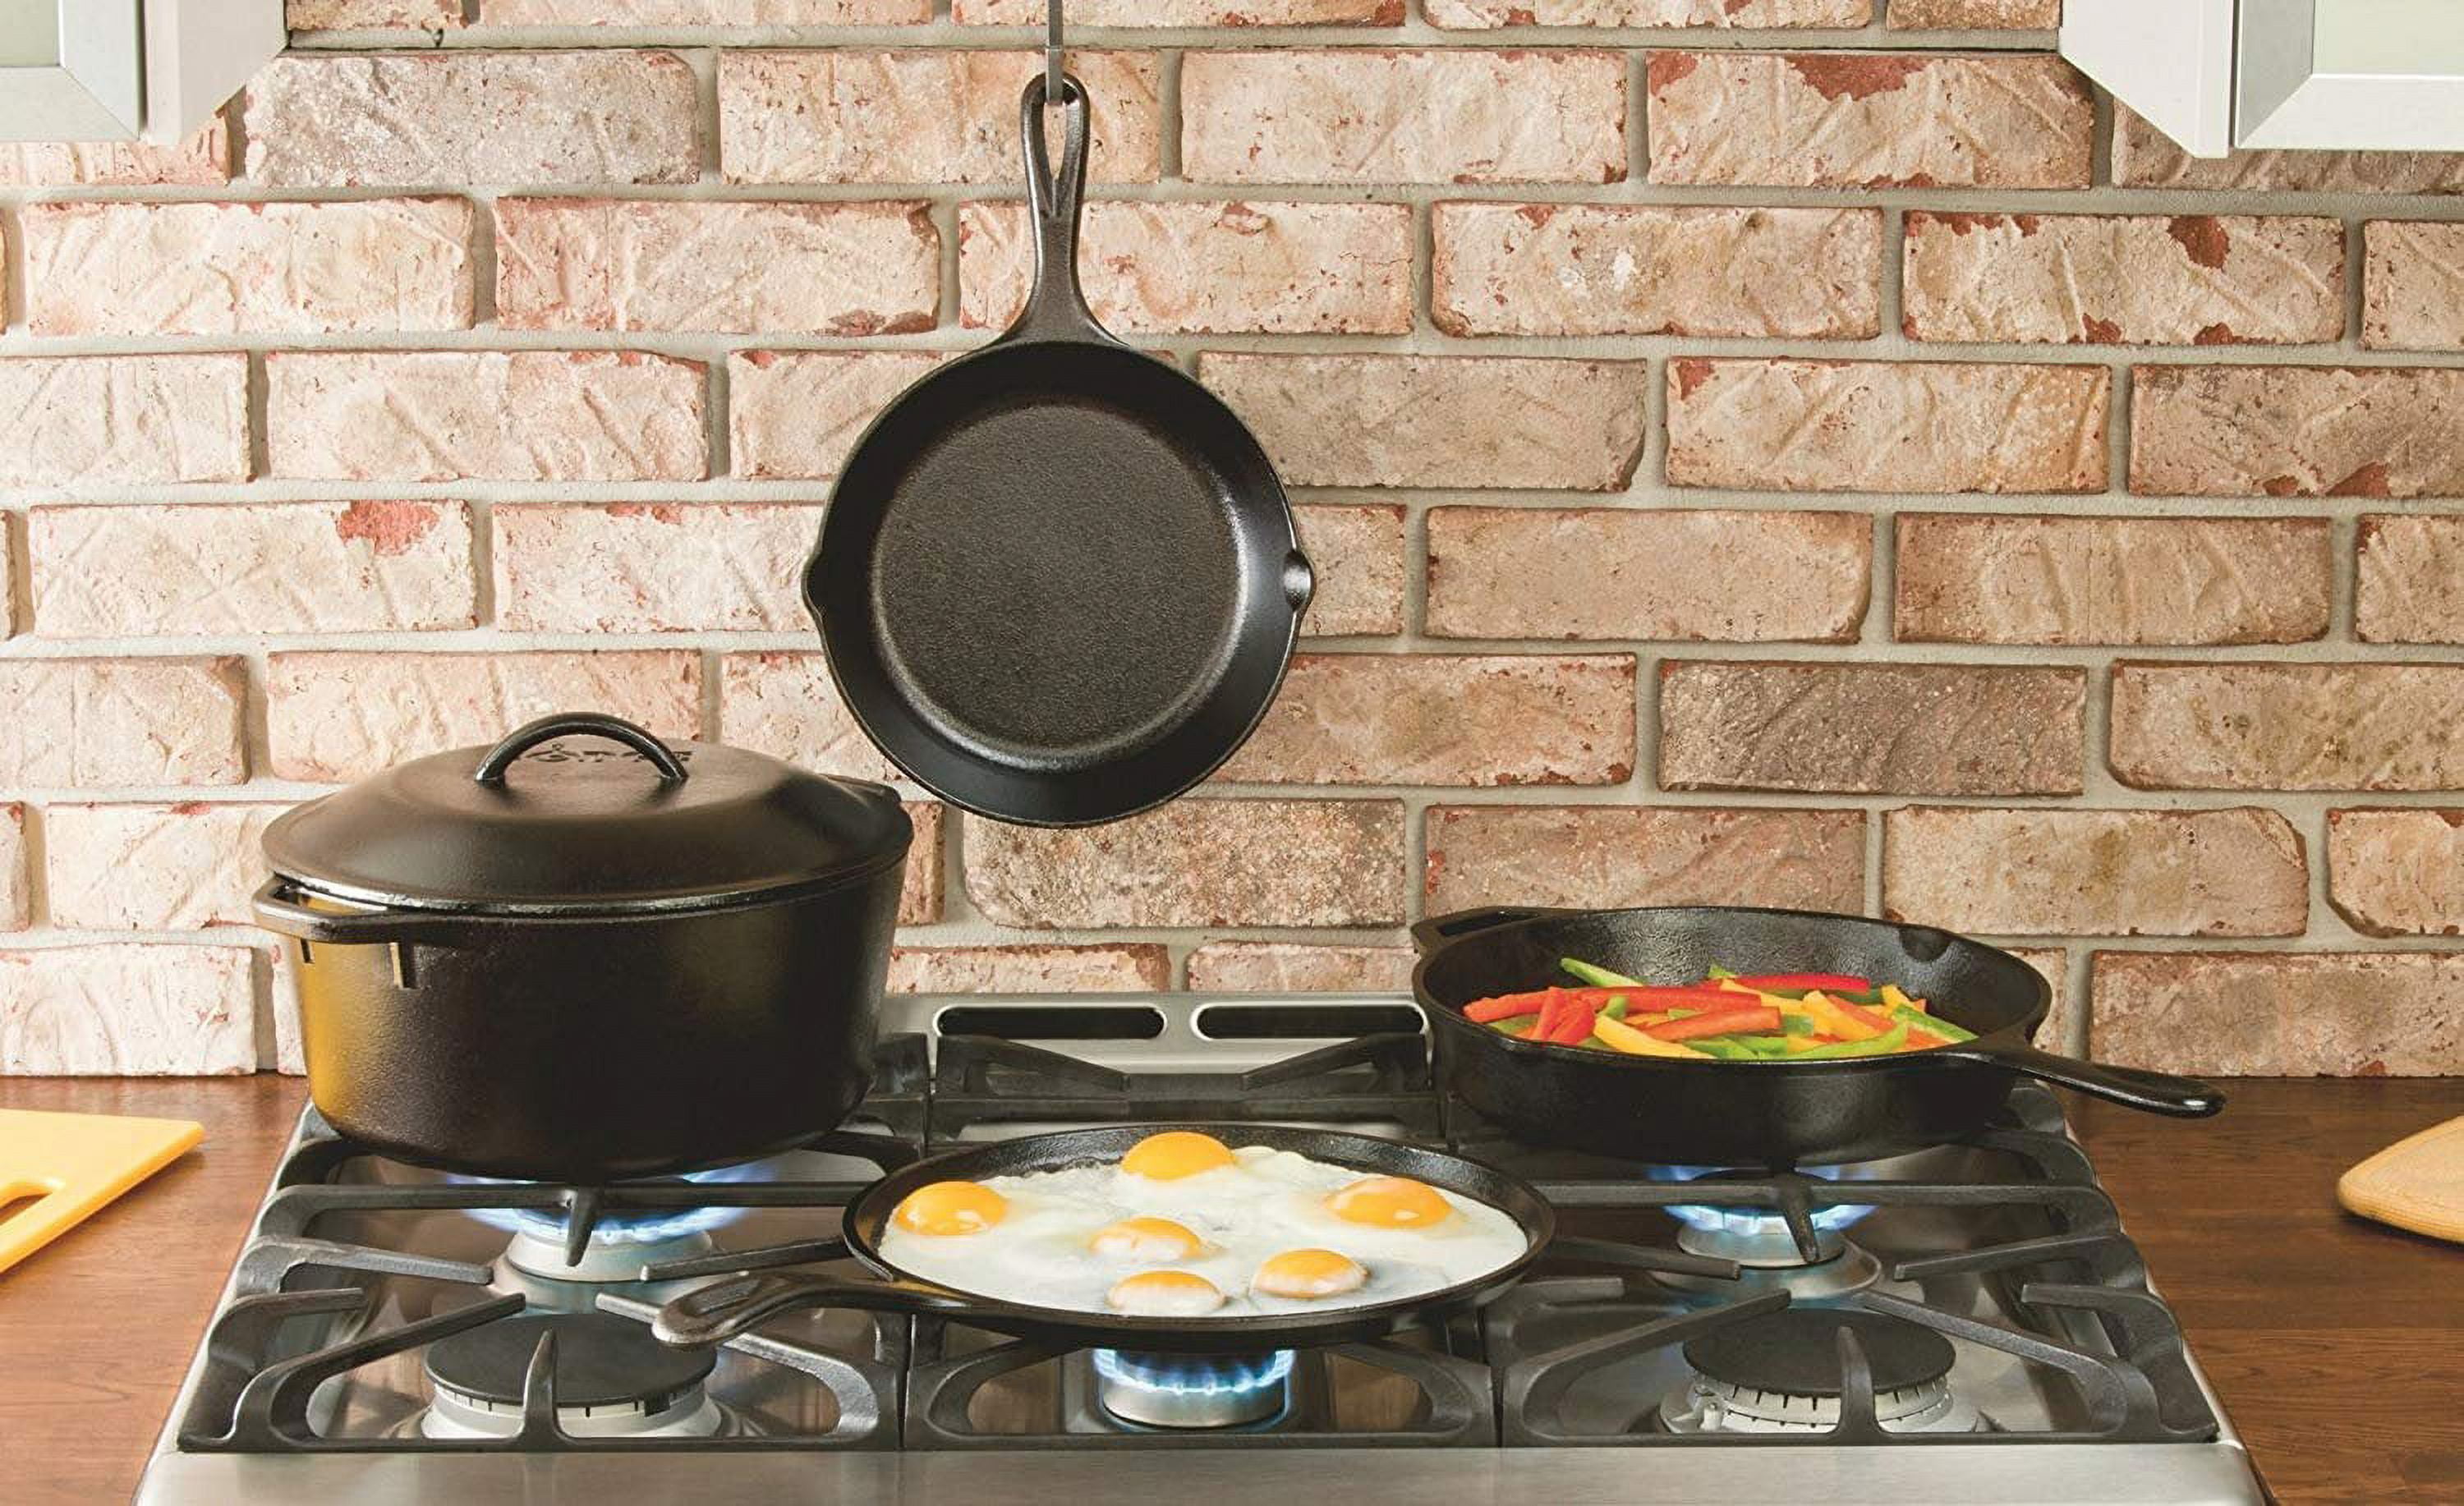  Lodge L8DOLKPLT Cast Iron Dutch Oven with Dual Handles,  Pre-Seasoned, 5-Quart,Black: Home & Kitchen